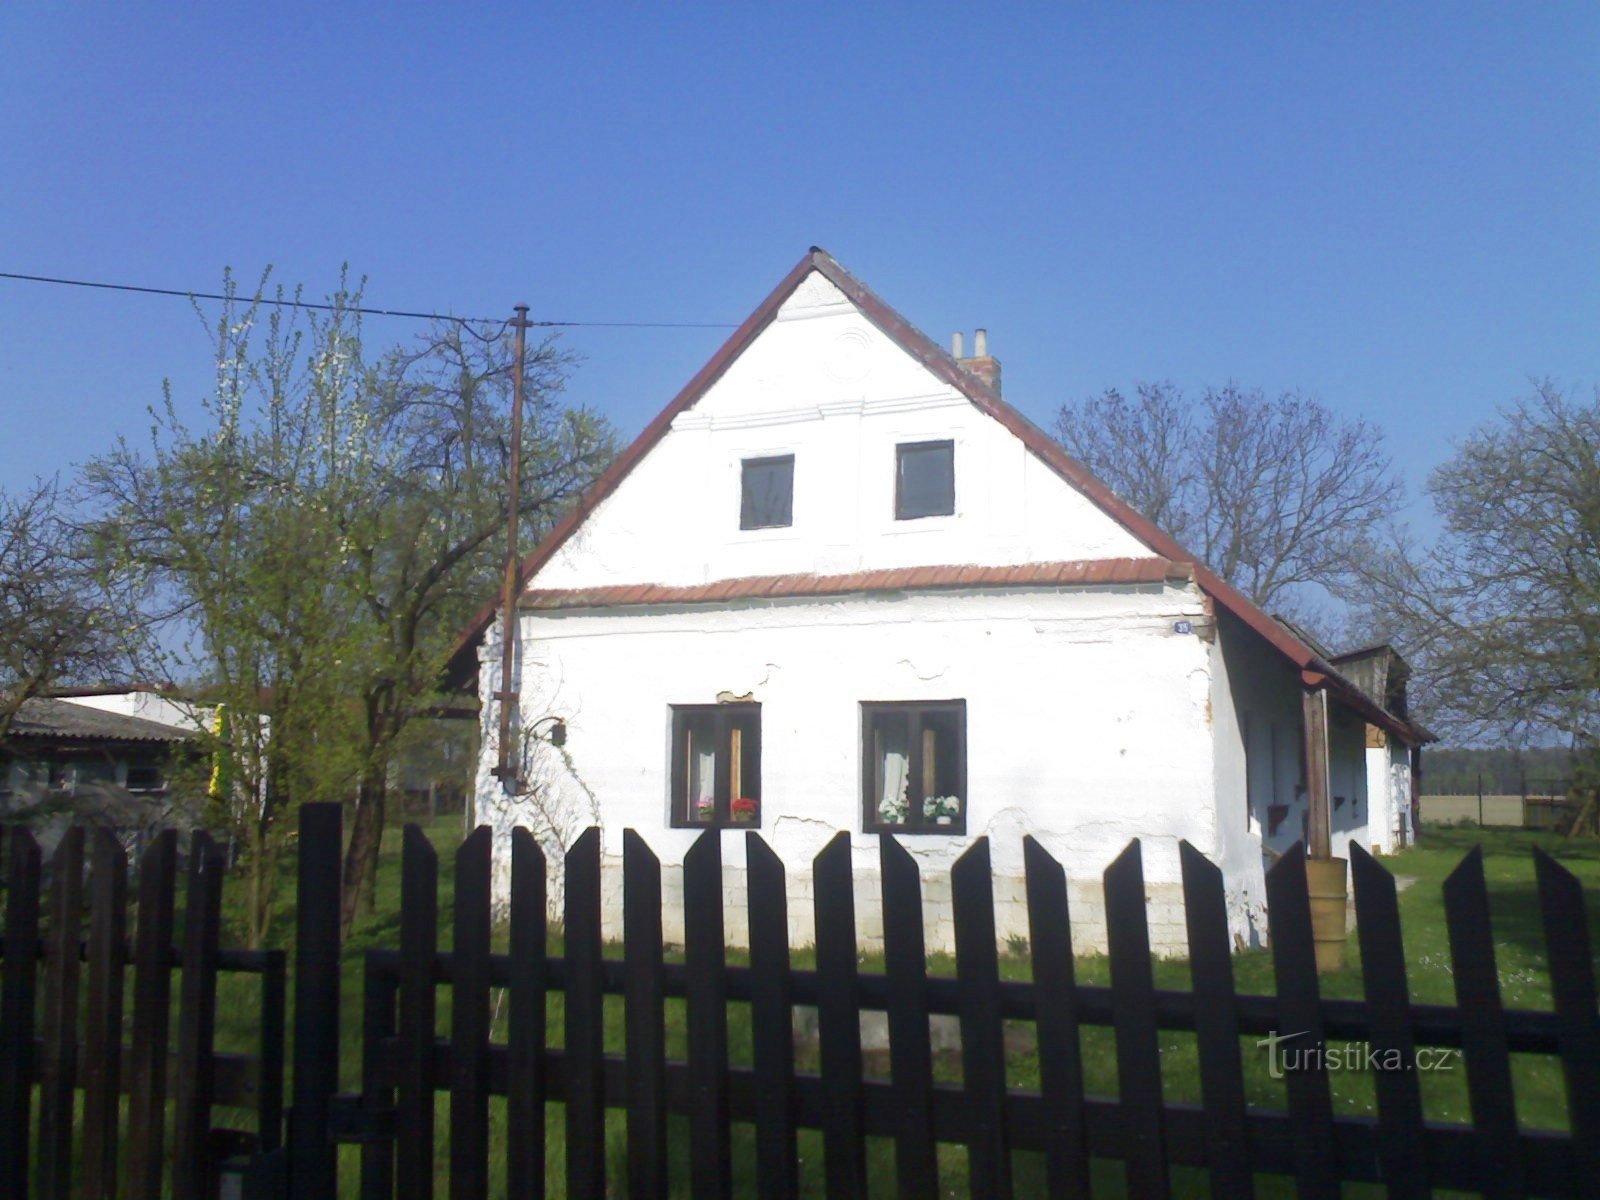 Hodeszowice